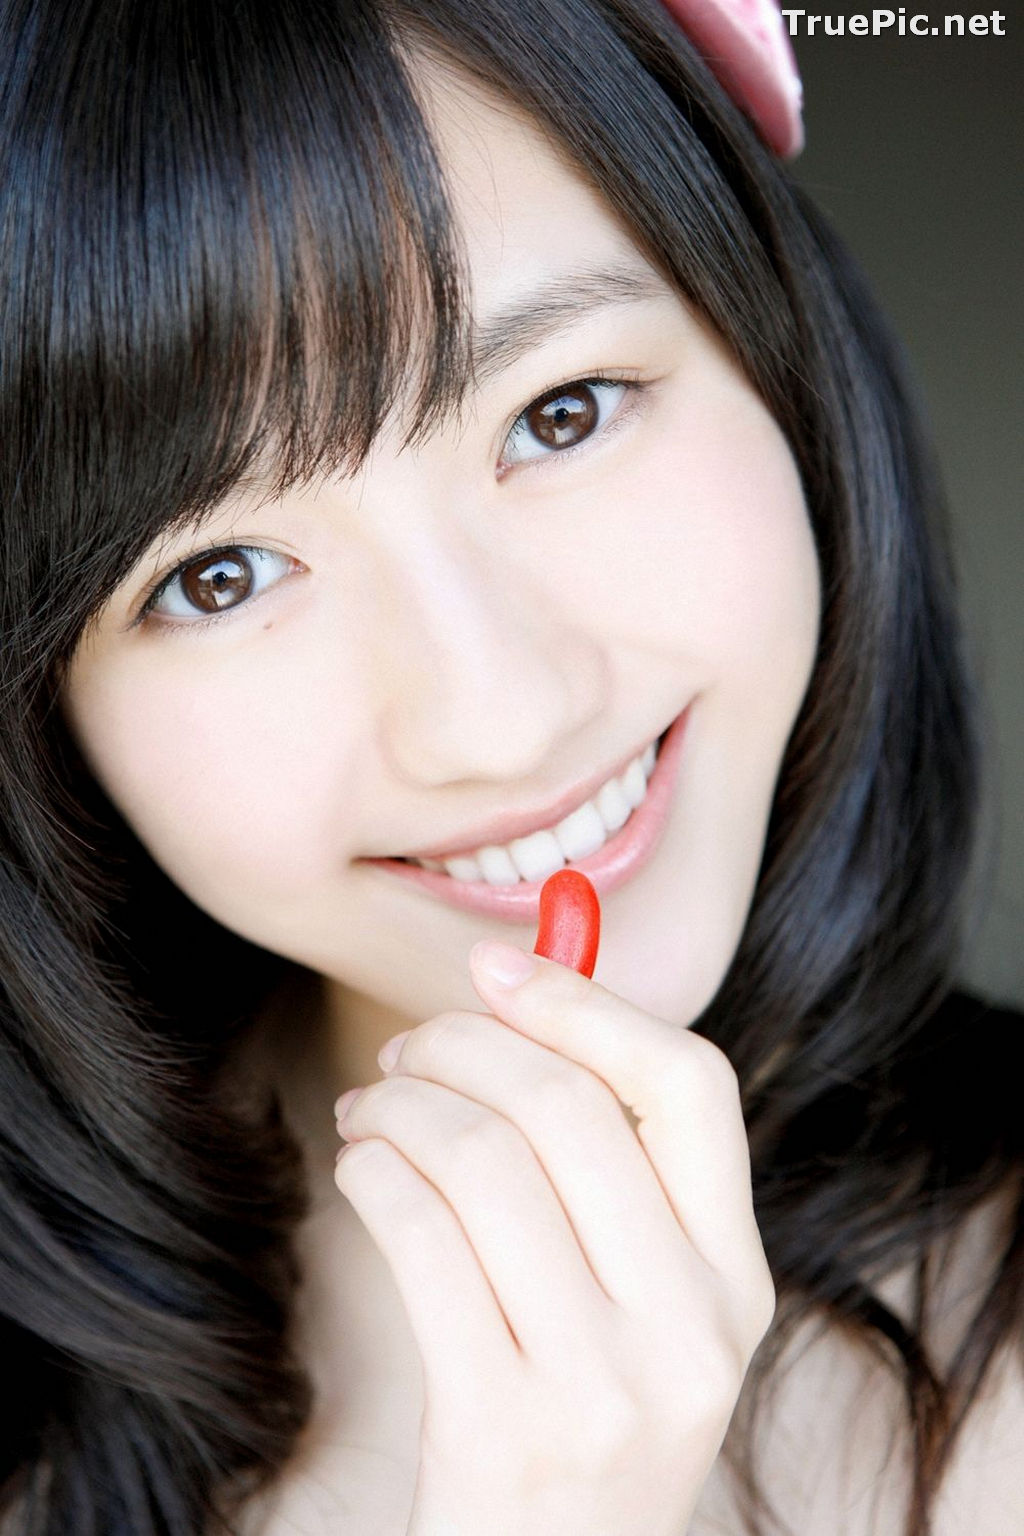 Image [YS Web] Vol.531 - Japanese Idol Girl Group (AKB48) - Mayu Watanabe - TruePic.net - Picture-57